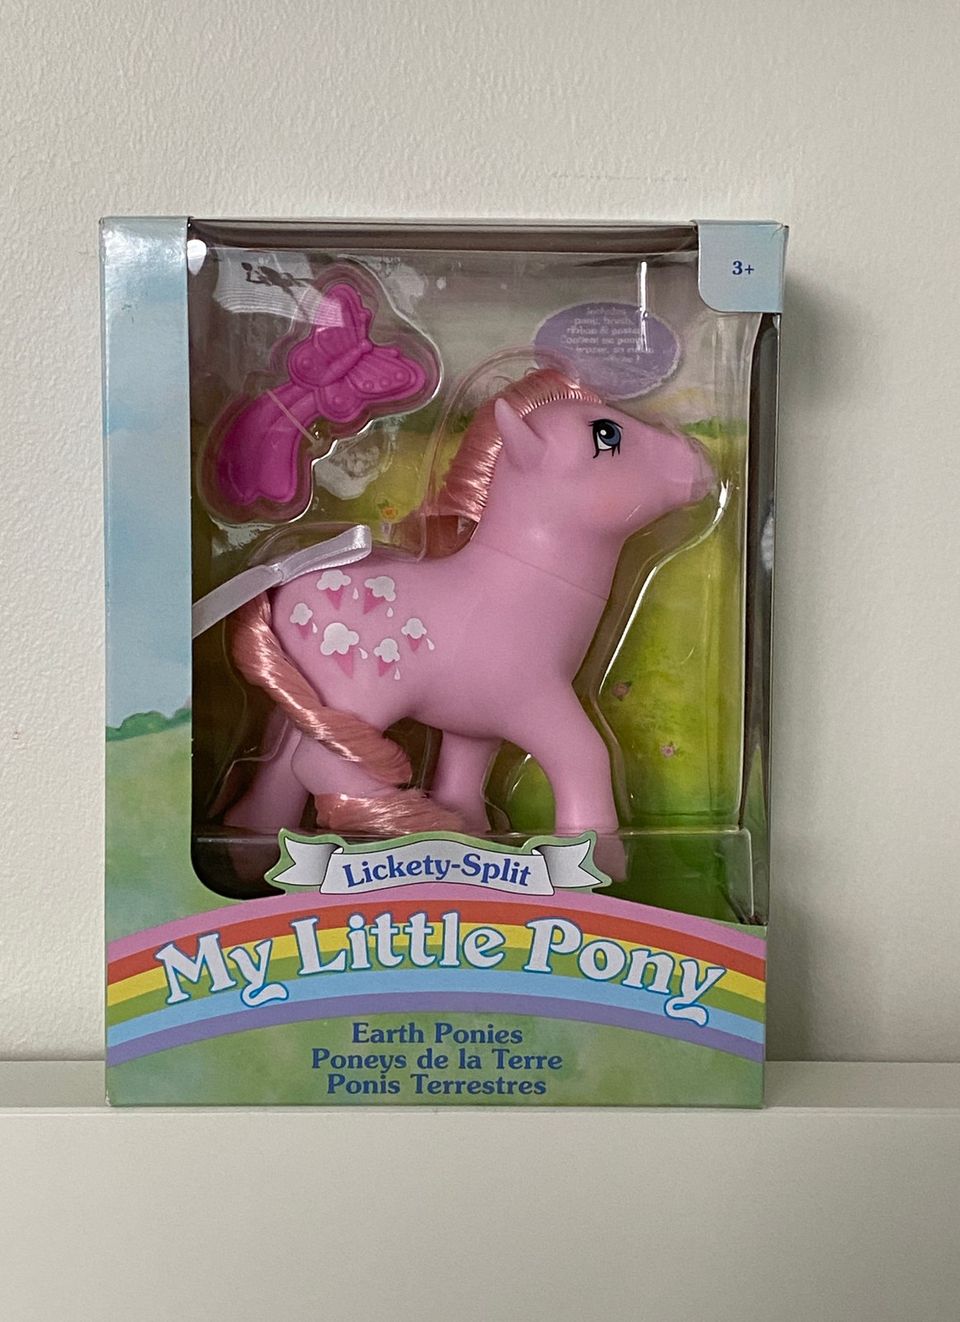 My Little Pony, Lickety-Split Classic retro